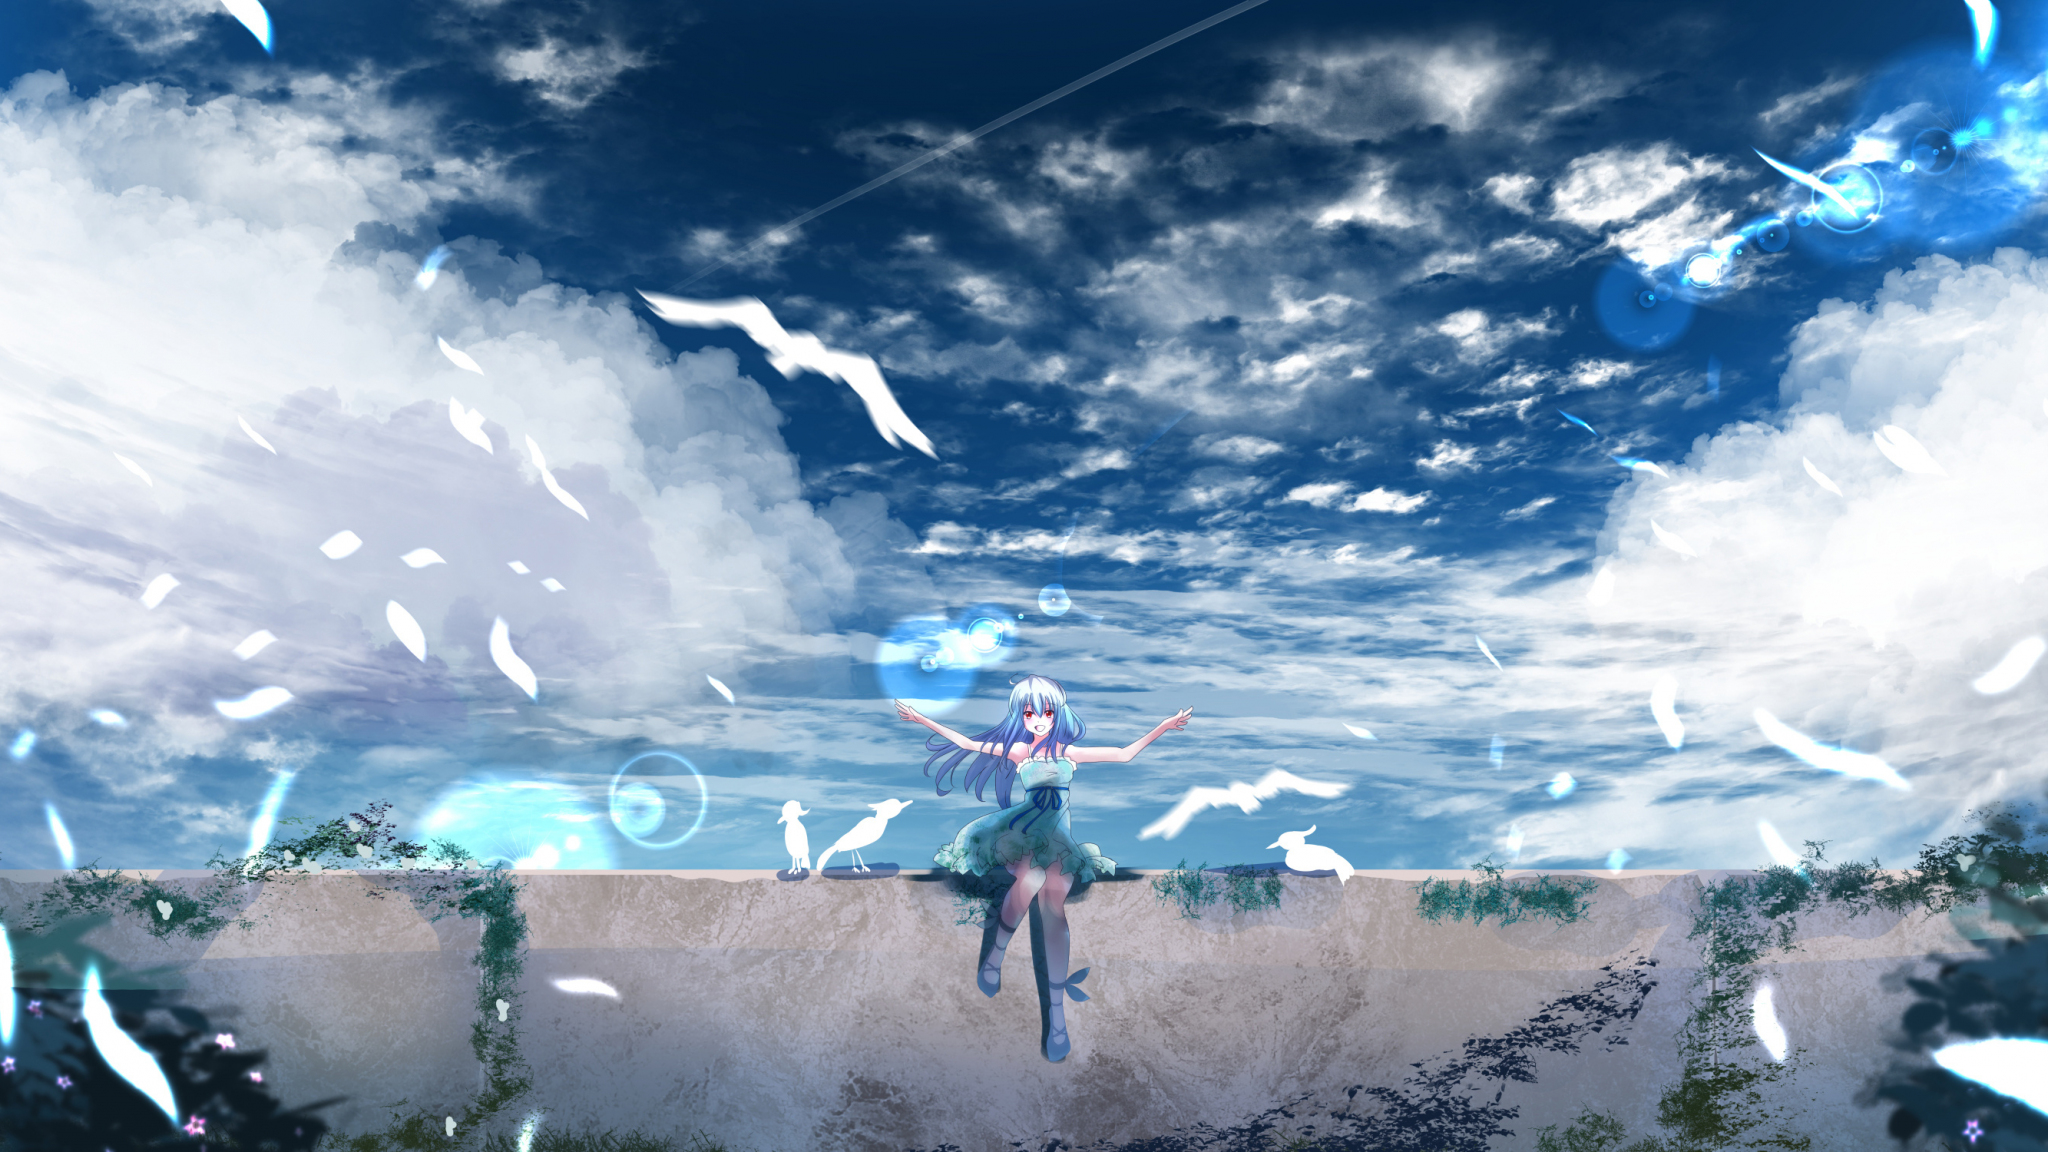 Download 2048x1152 Wallpaper Beautiful Scenery Anime Outdoor